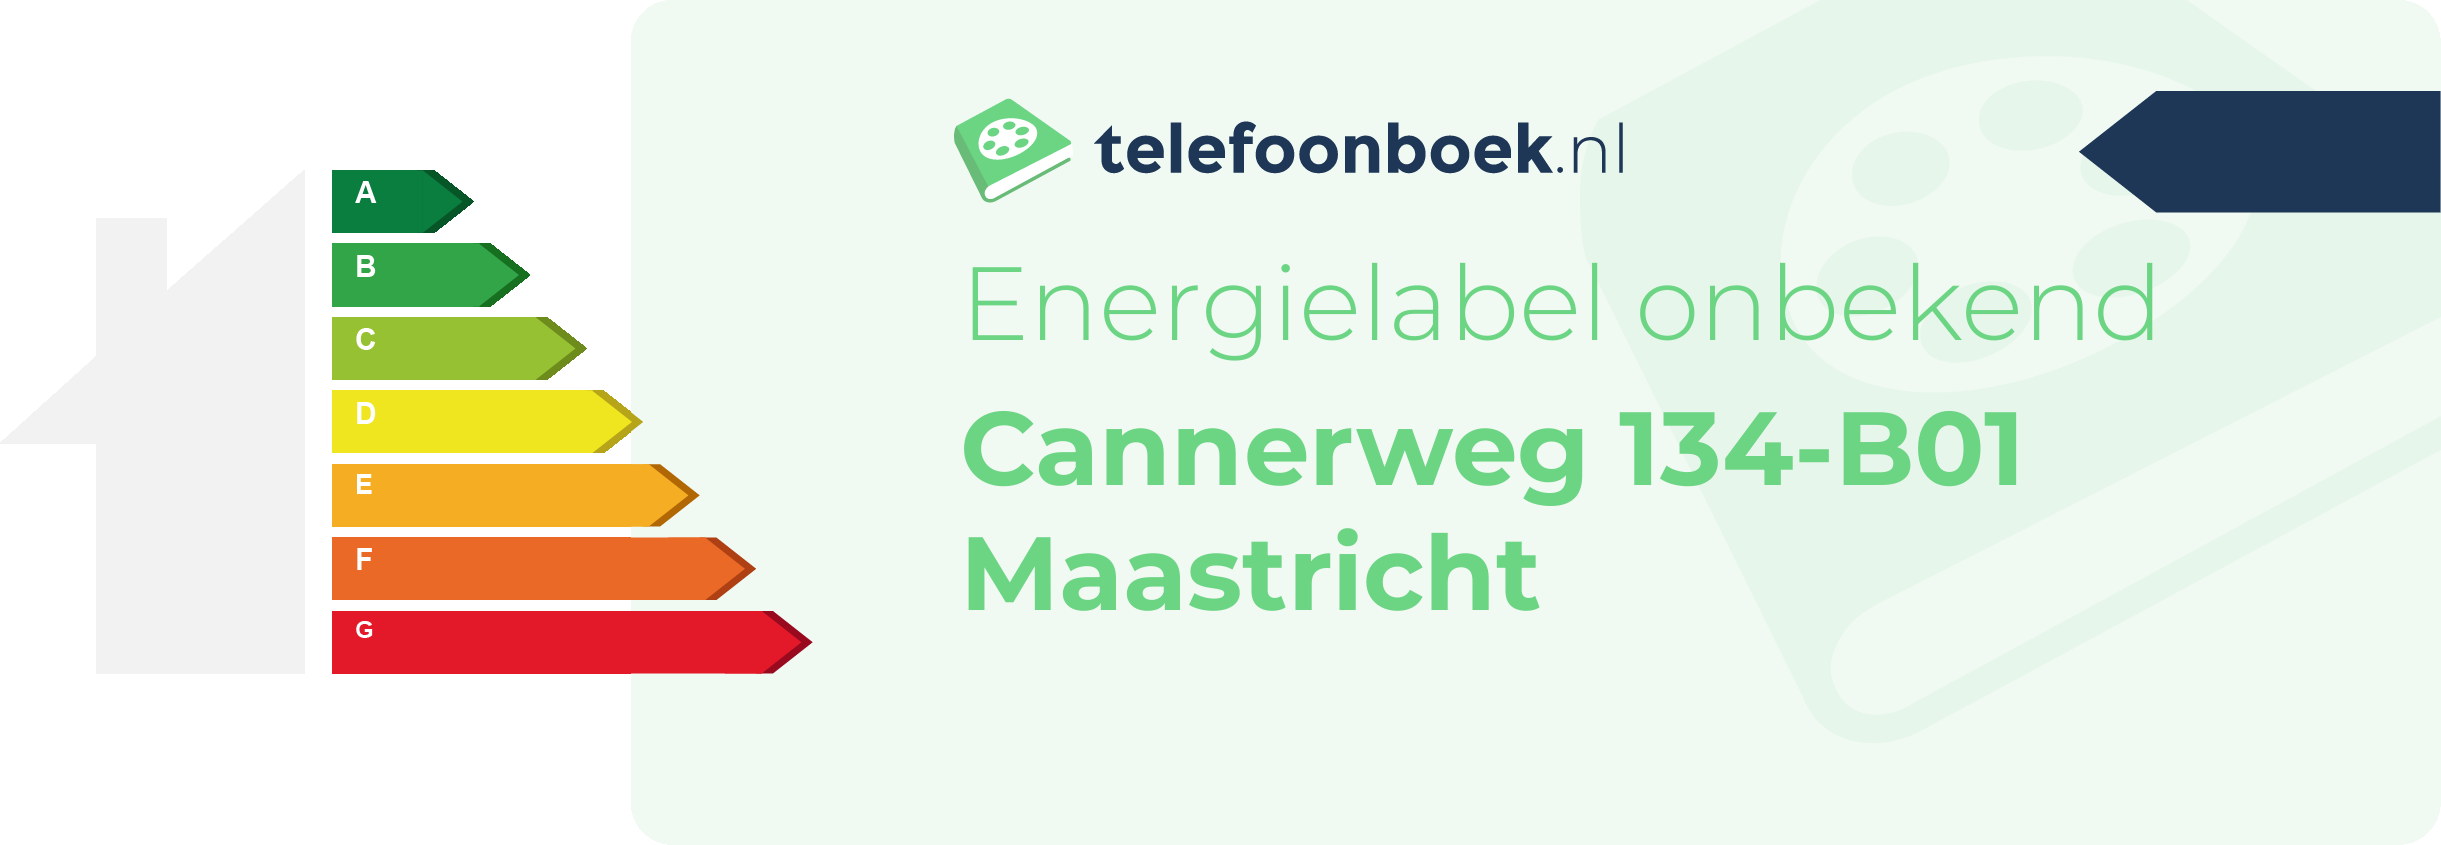 Energielabel Cannerweg 134-B01 Maastricht